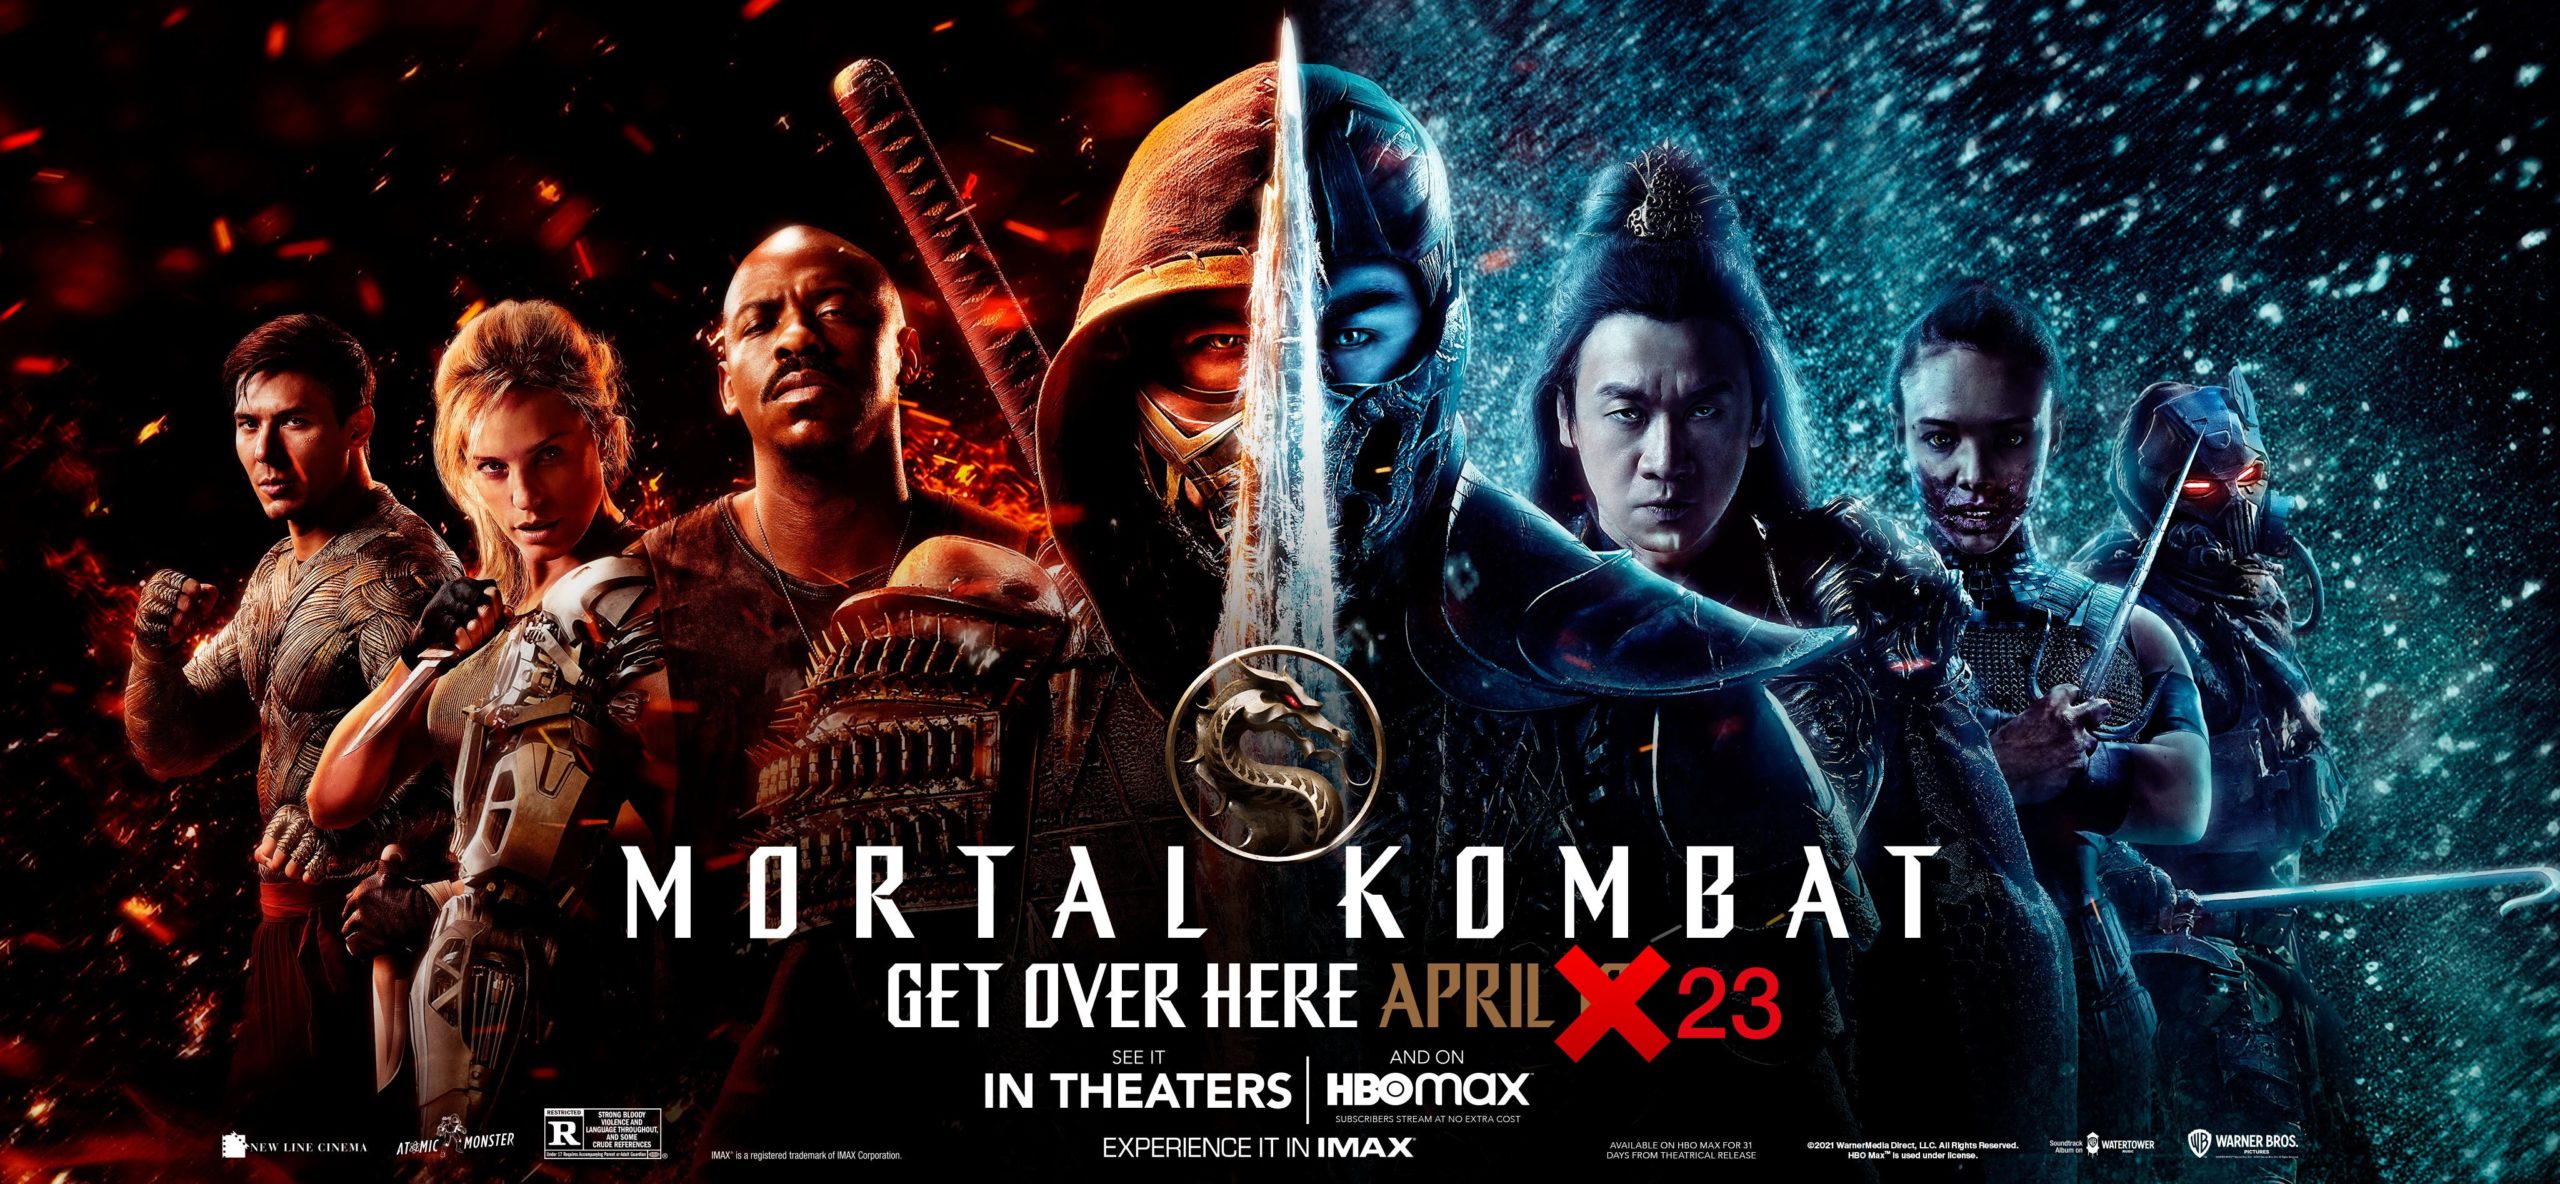 Warner Bros. Delayed "Mortal Kombat" Release Date For One Week Later